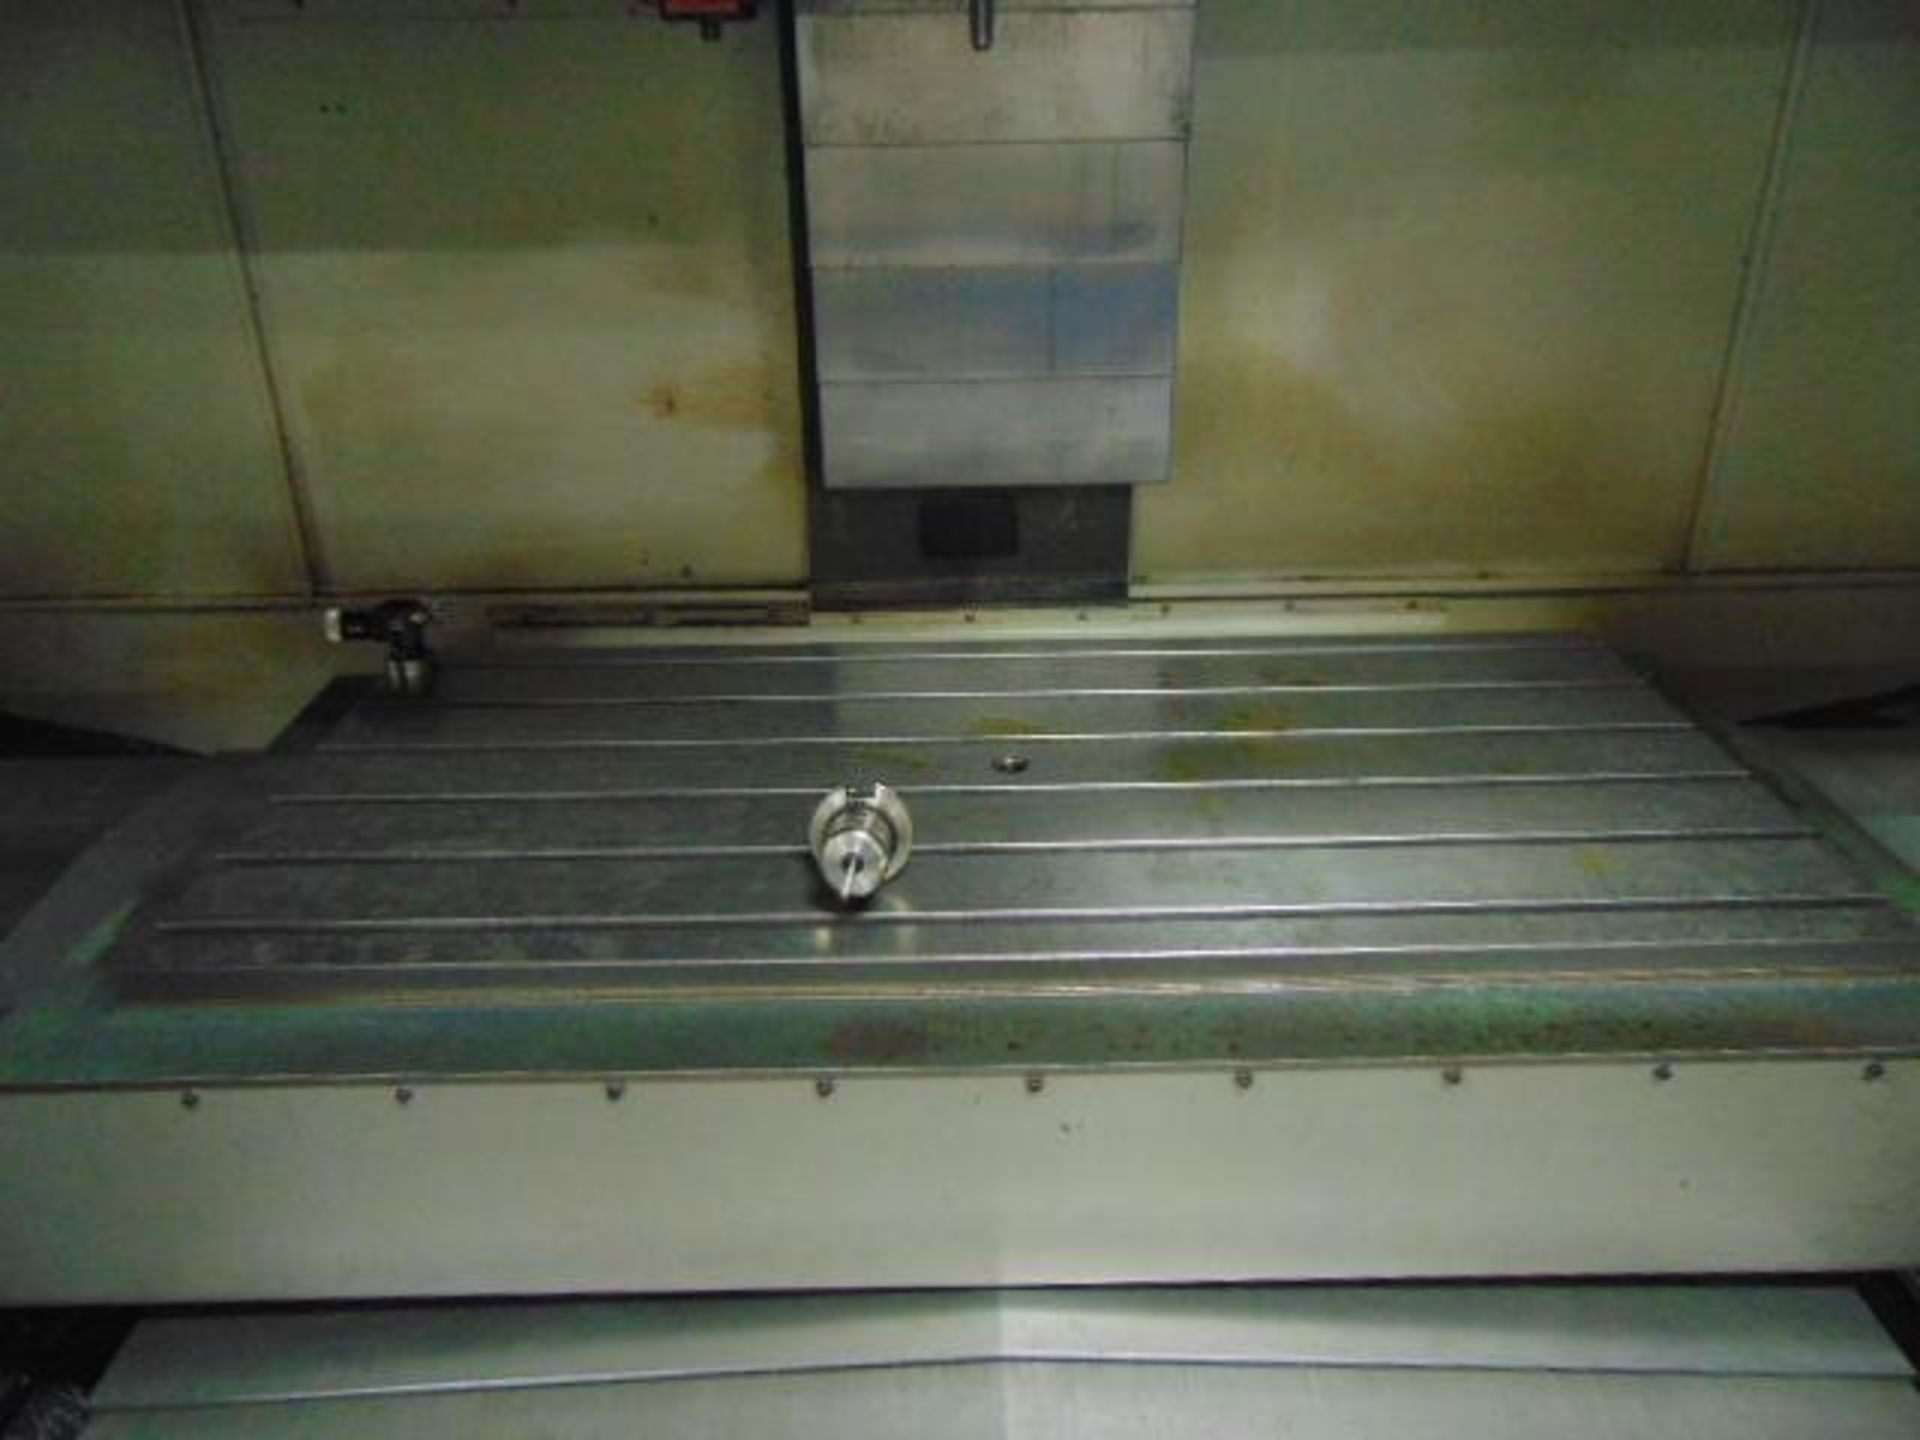 4-AXIS VERTICAL MACHINING CENTER, DOOSAN MDL. MYNX 7500/50, new 4/2012, Fanuc 31i CNC, 29.5" x 63" t - Image 5 of 21